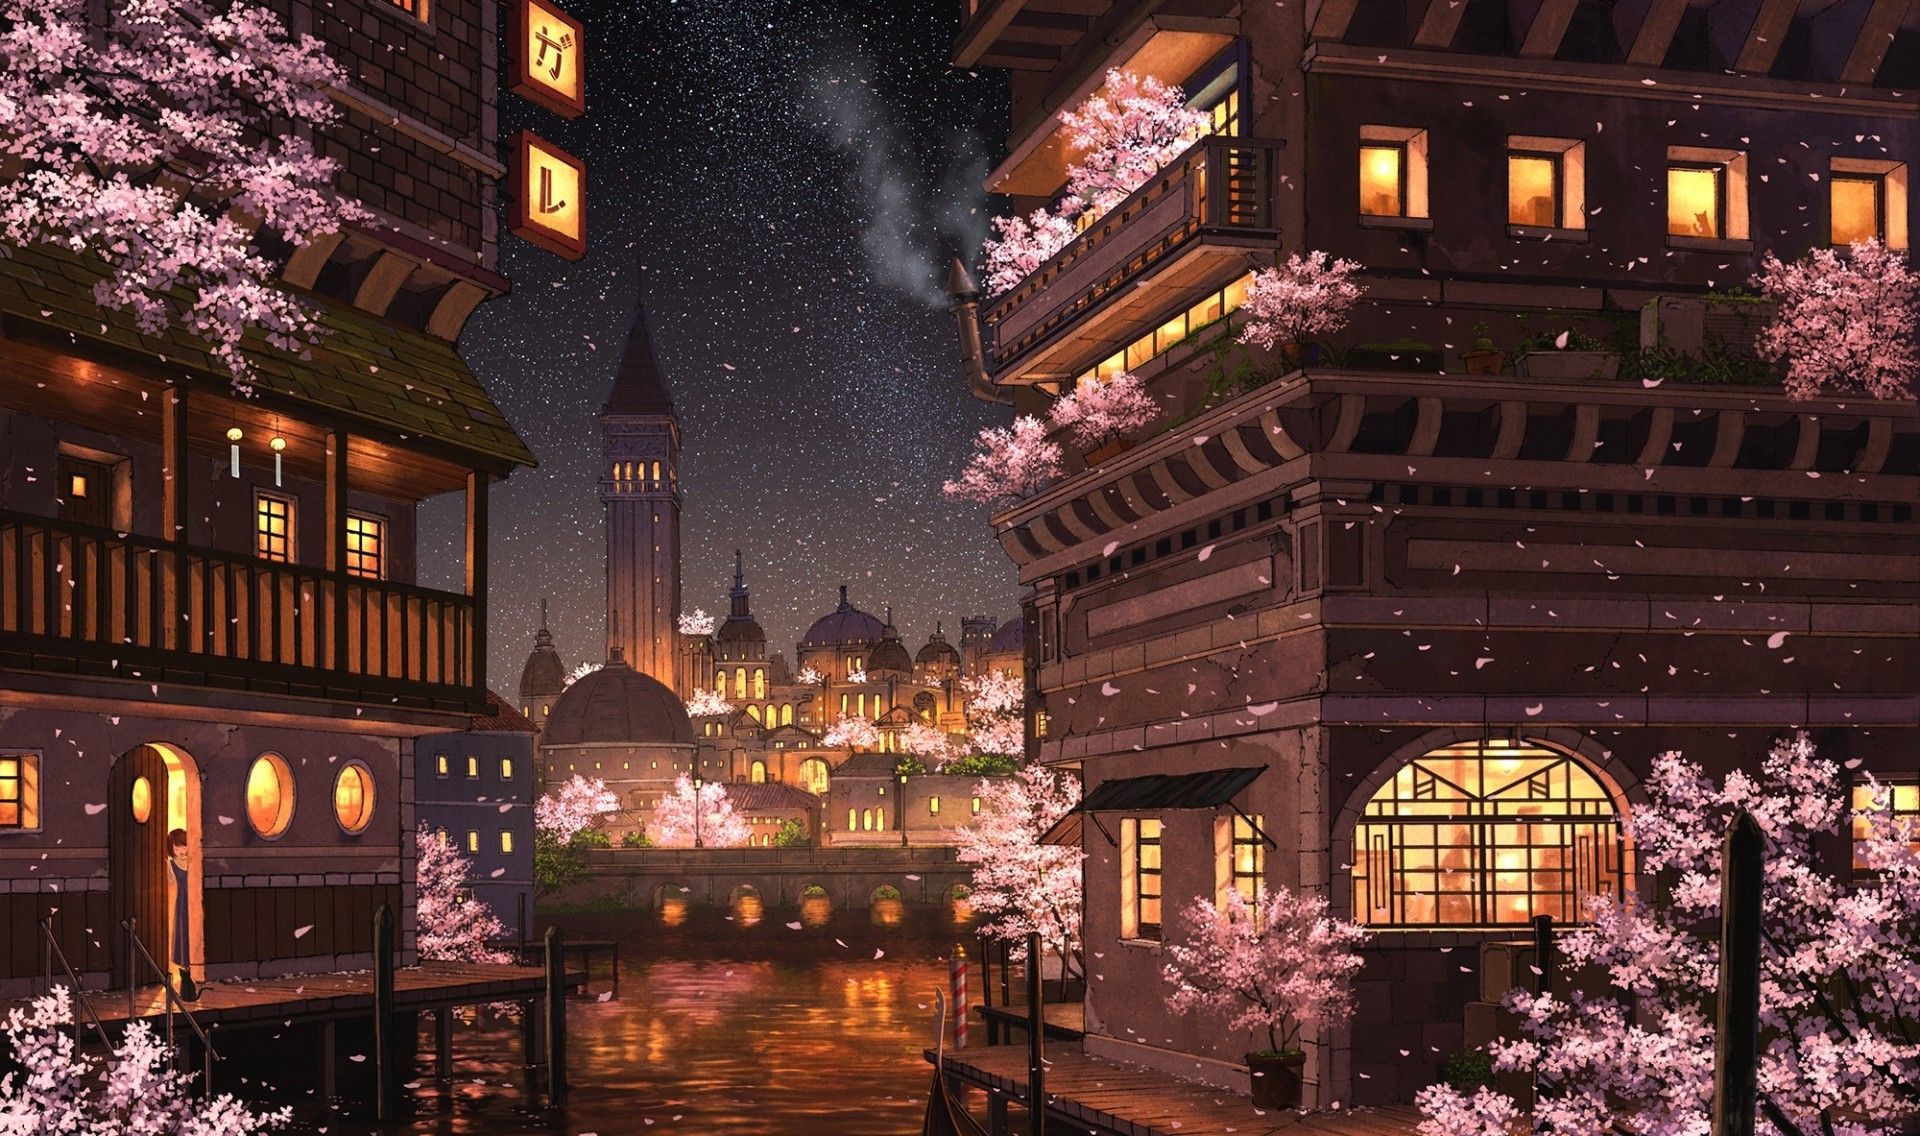 Download 1920x1136 Anime City, Sakura Blossom, Night, Buildings, Lights, Stars, River Wallpaper